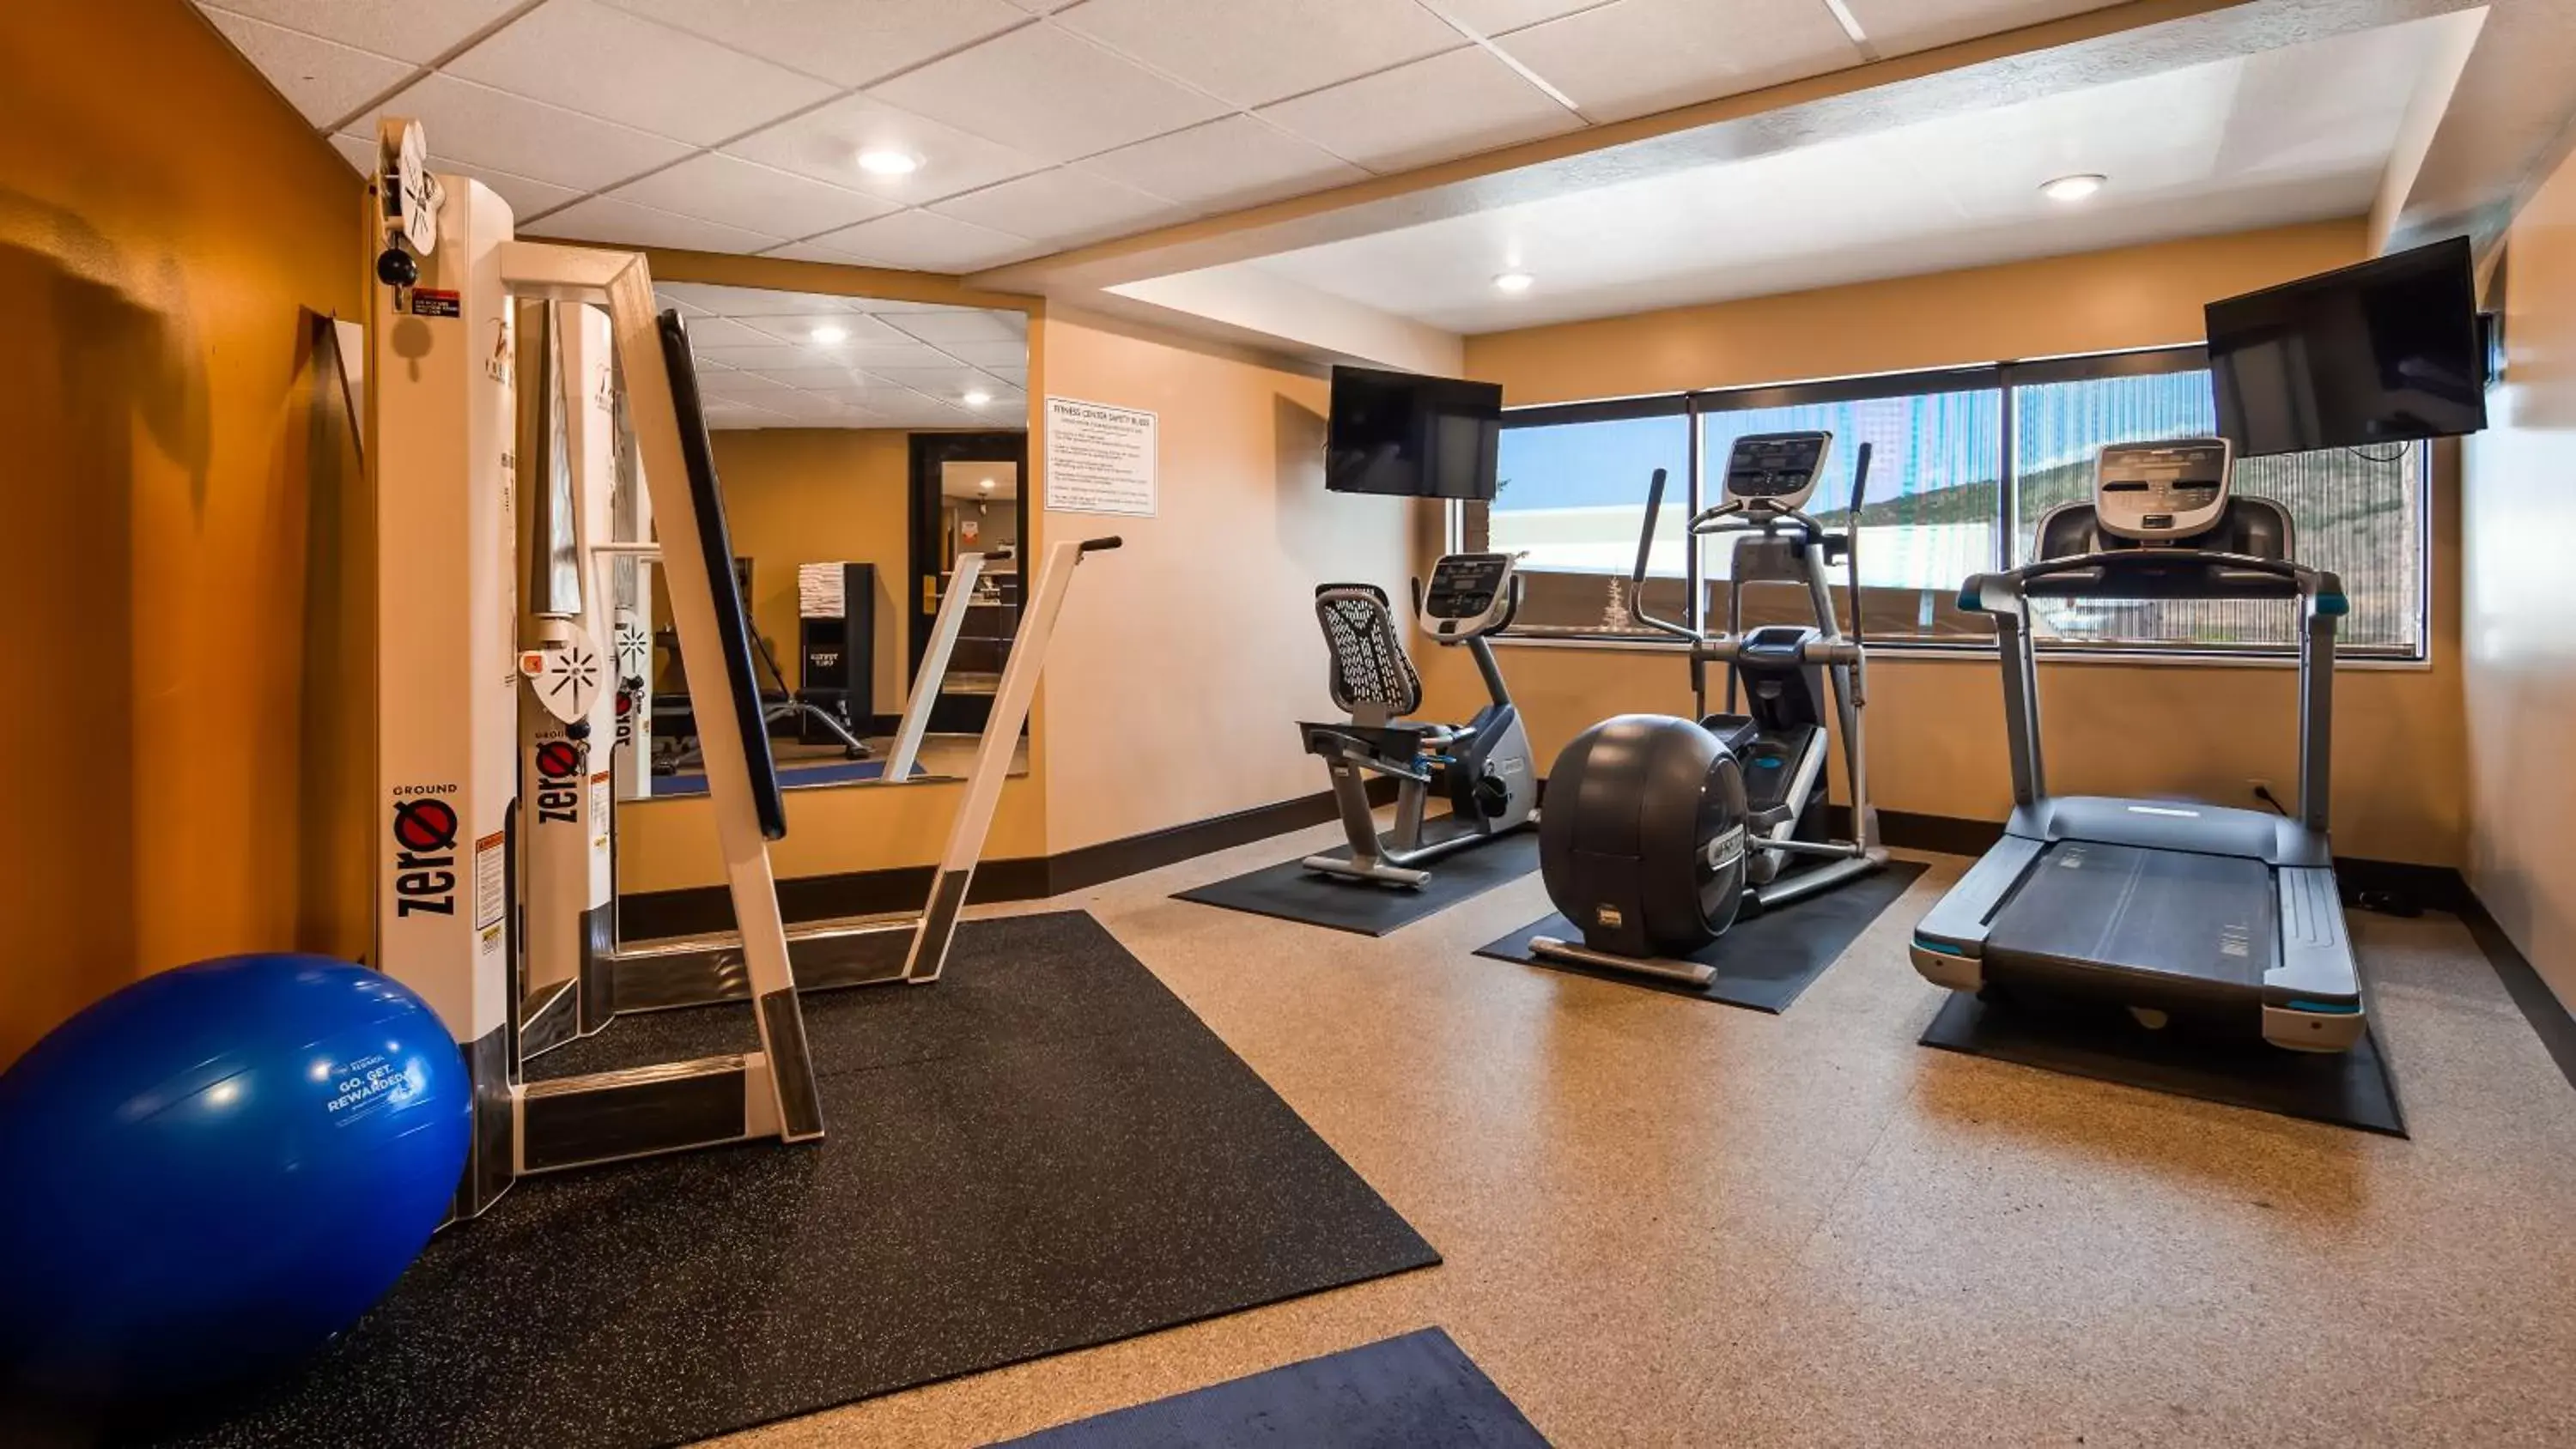 Fitness centre/facilities, Fitness Center/Facilities in Best Western Landmark Inn